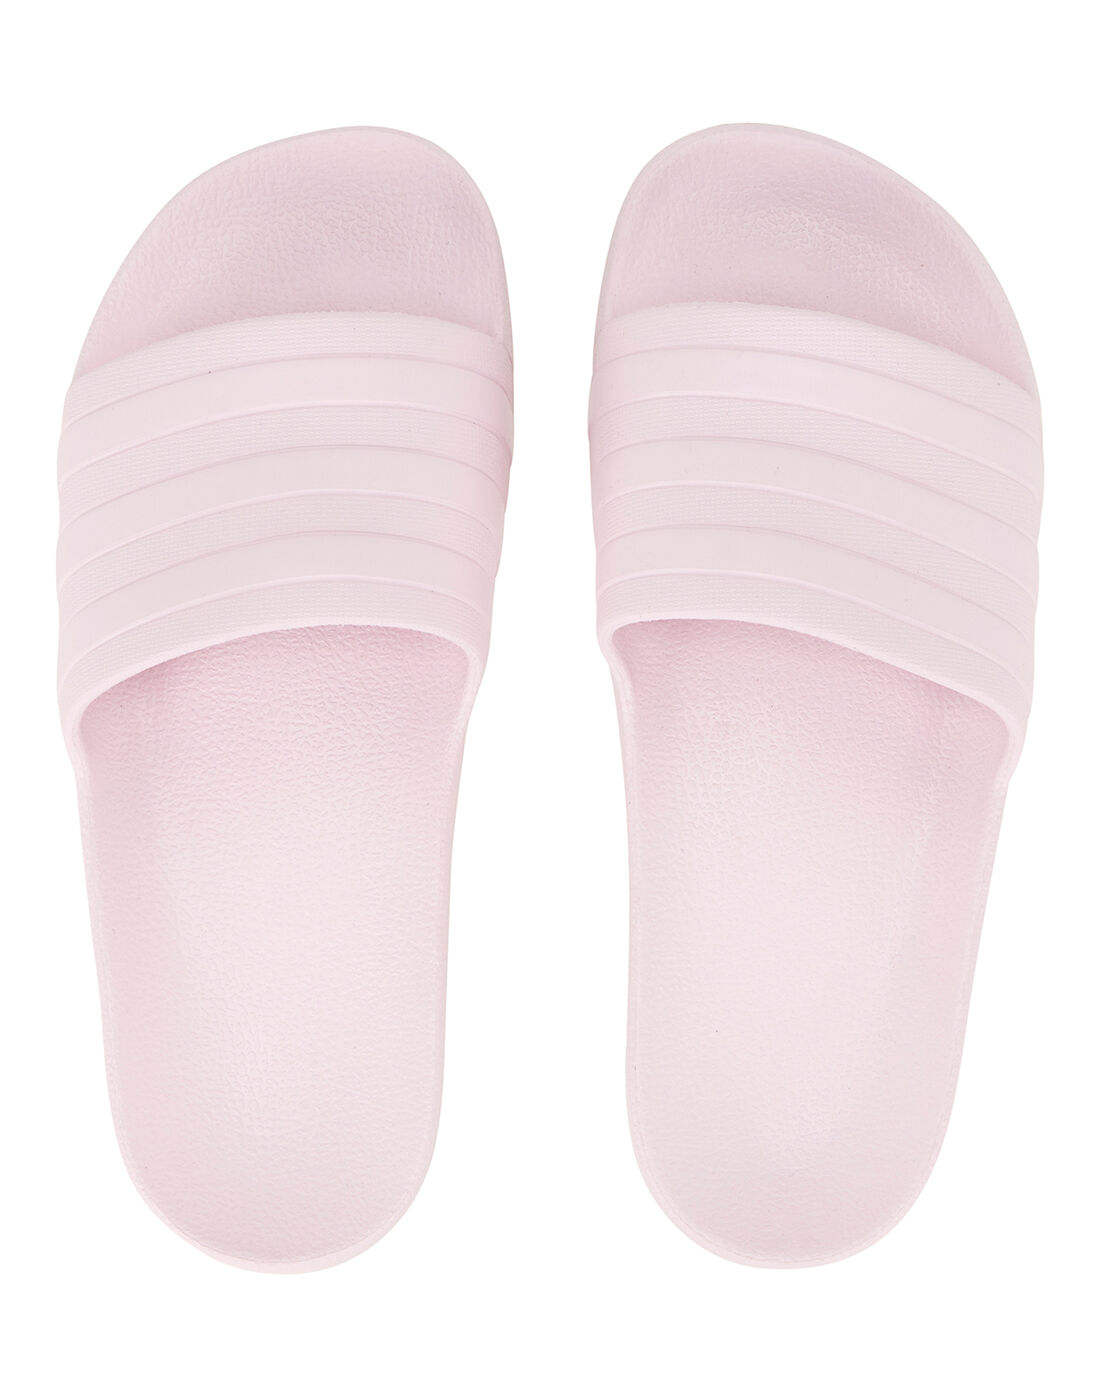 adidas sandals womens pink